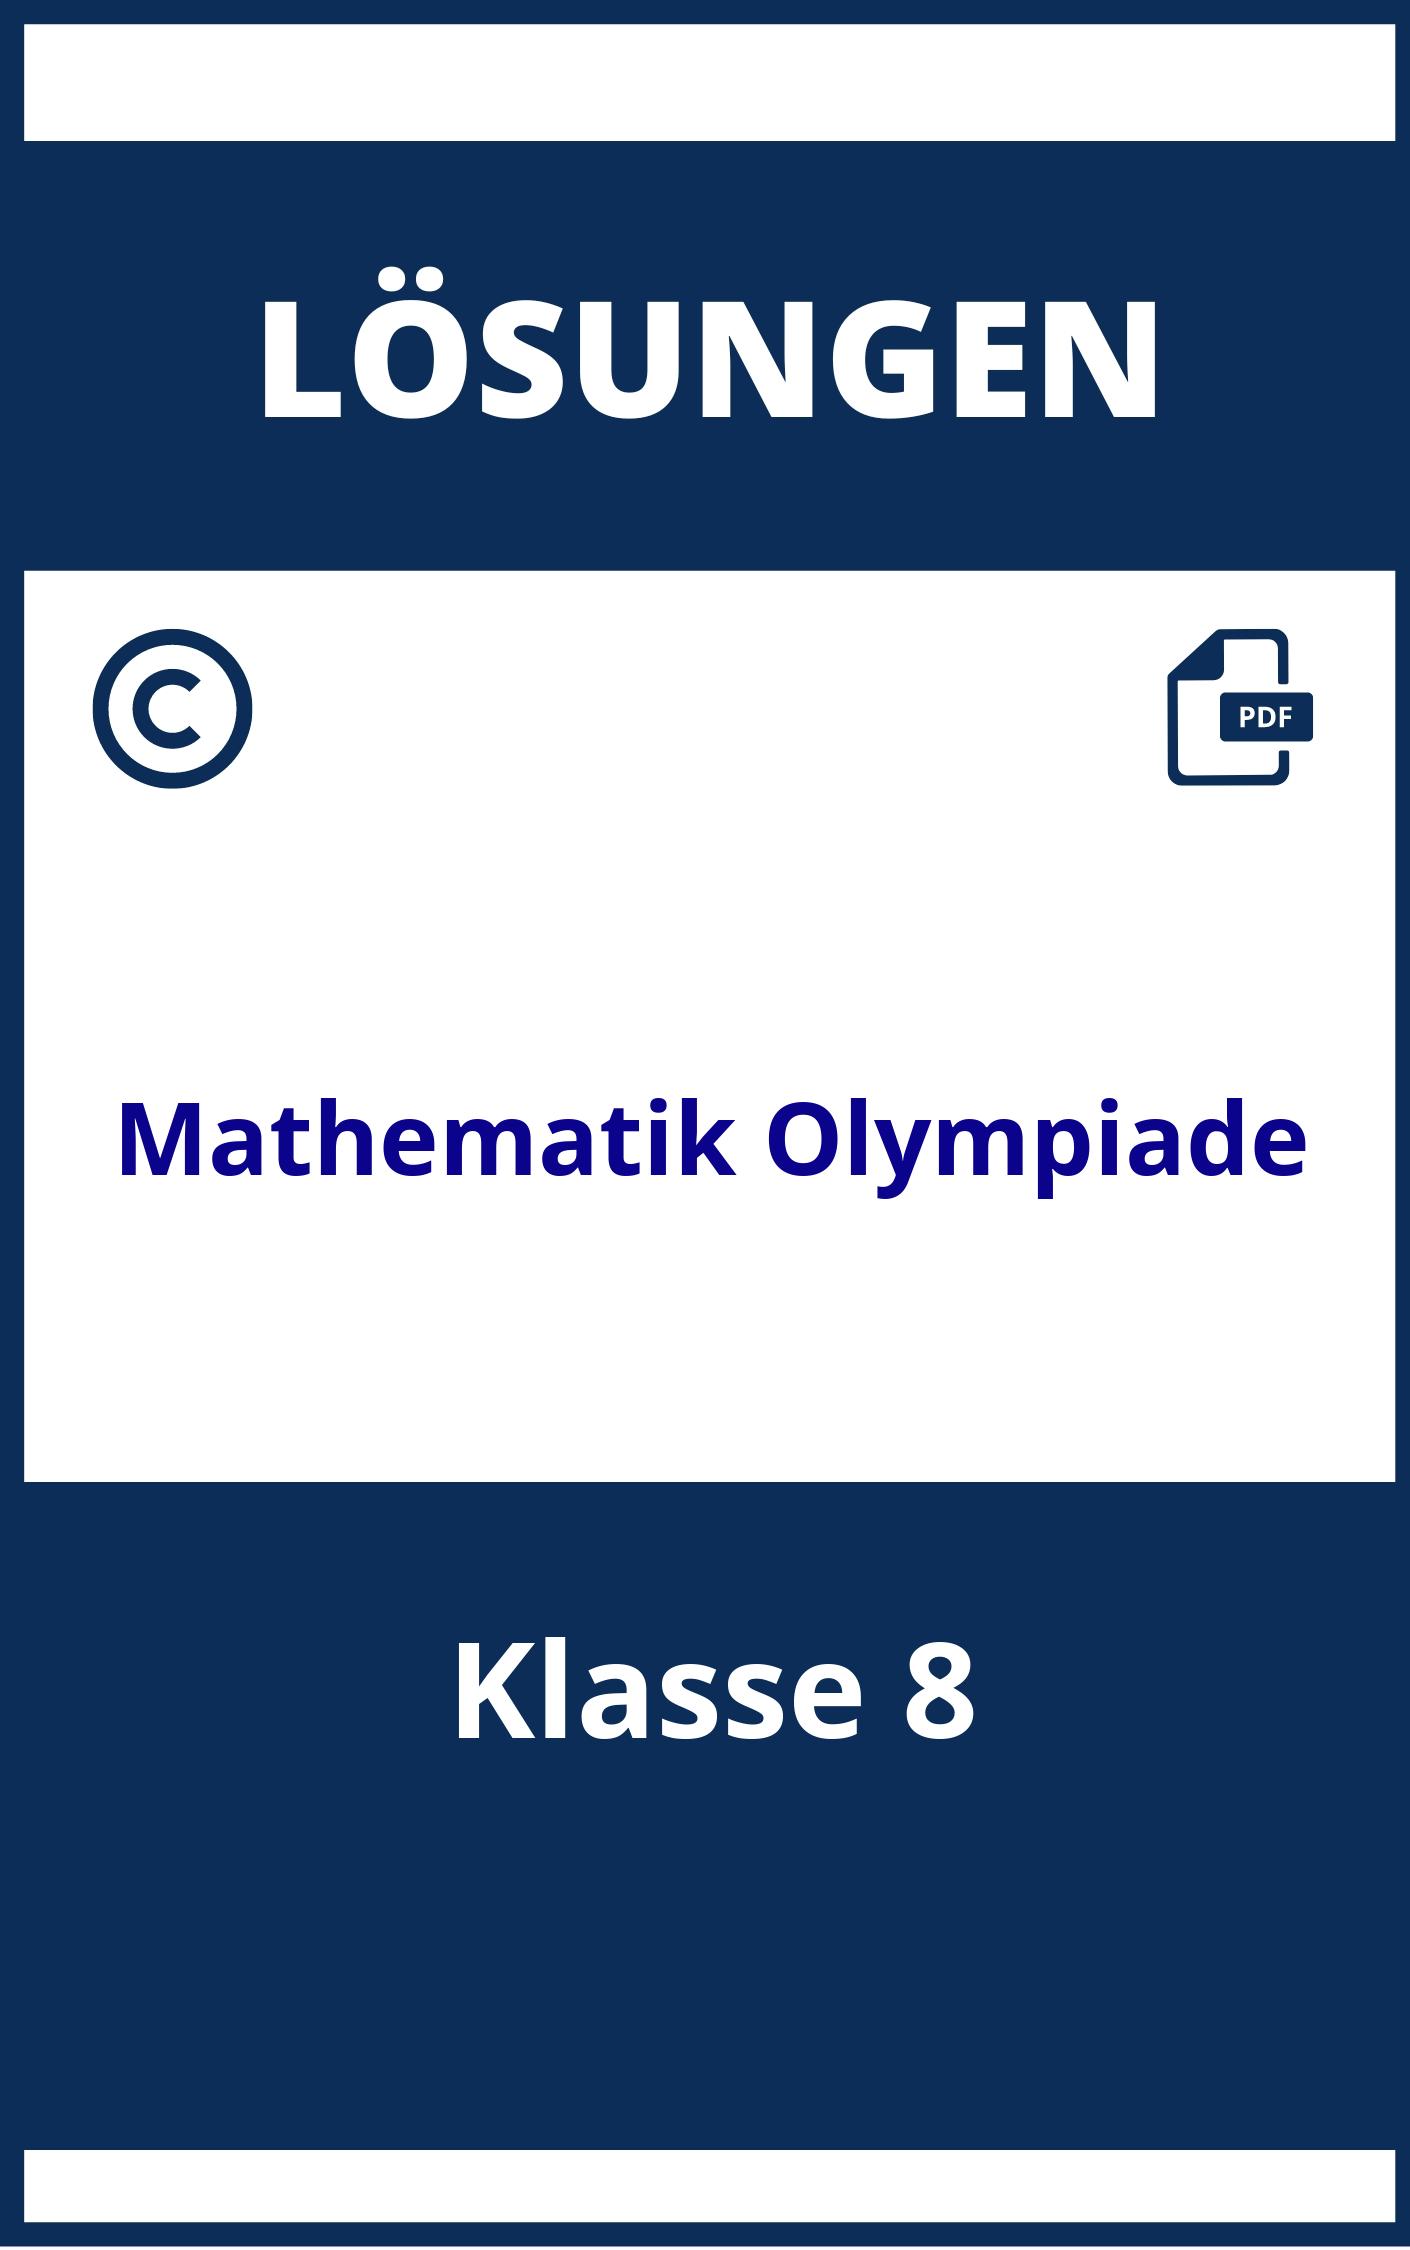 56. Mathematik Olympiade Lösungen Klasse 8